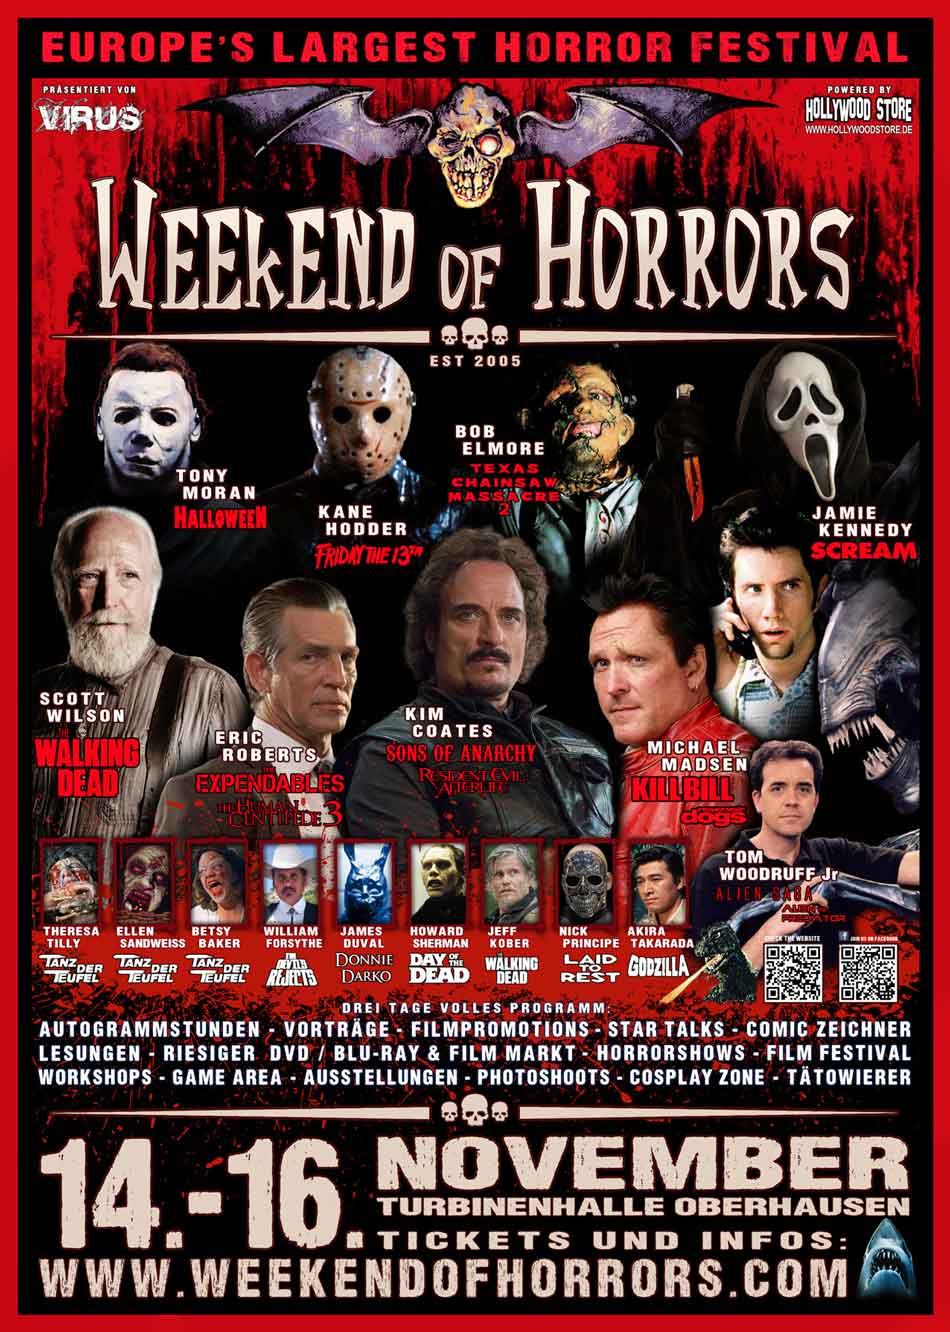 Weekend of Horrors – Europas ultimative horror festival